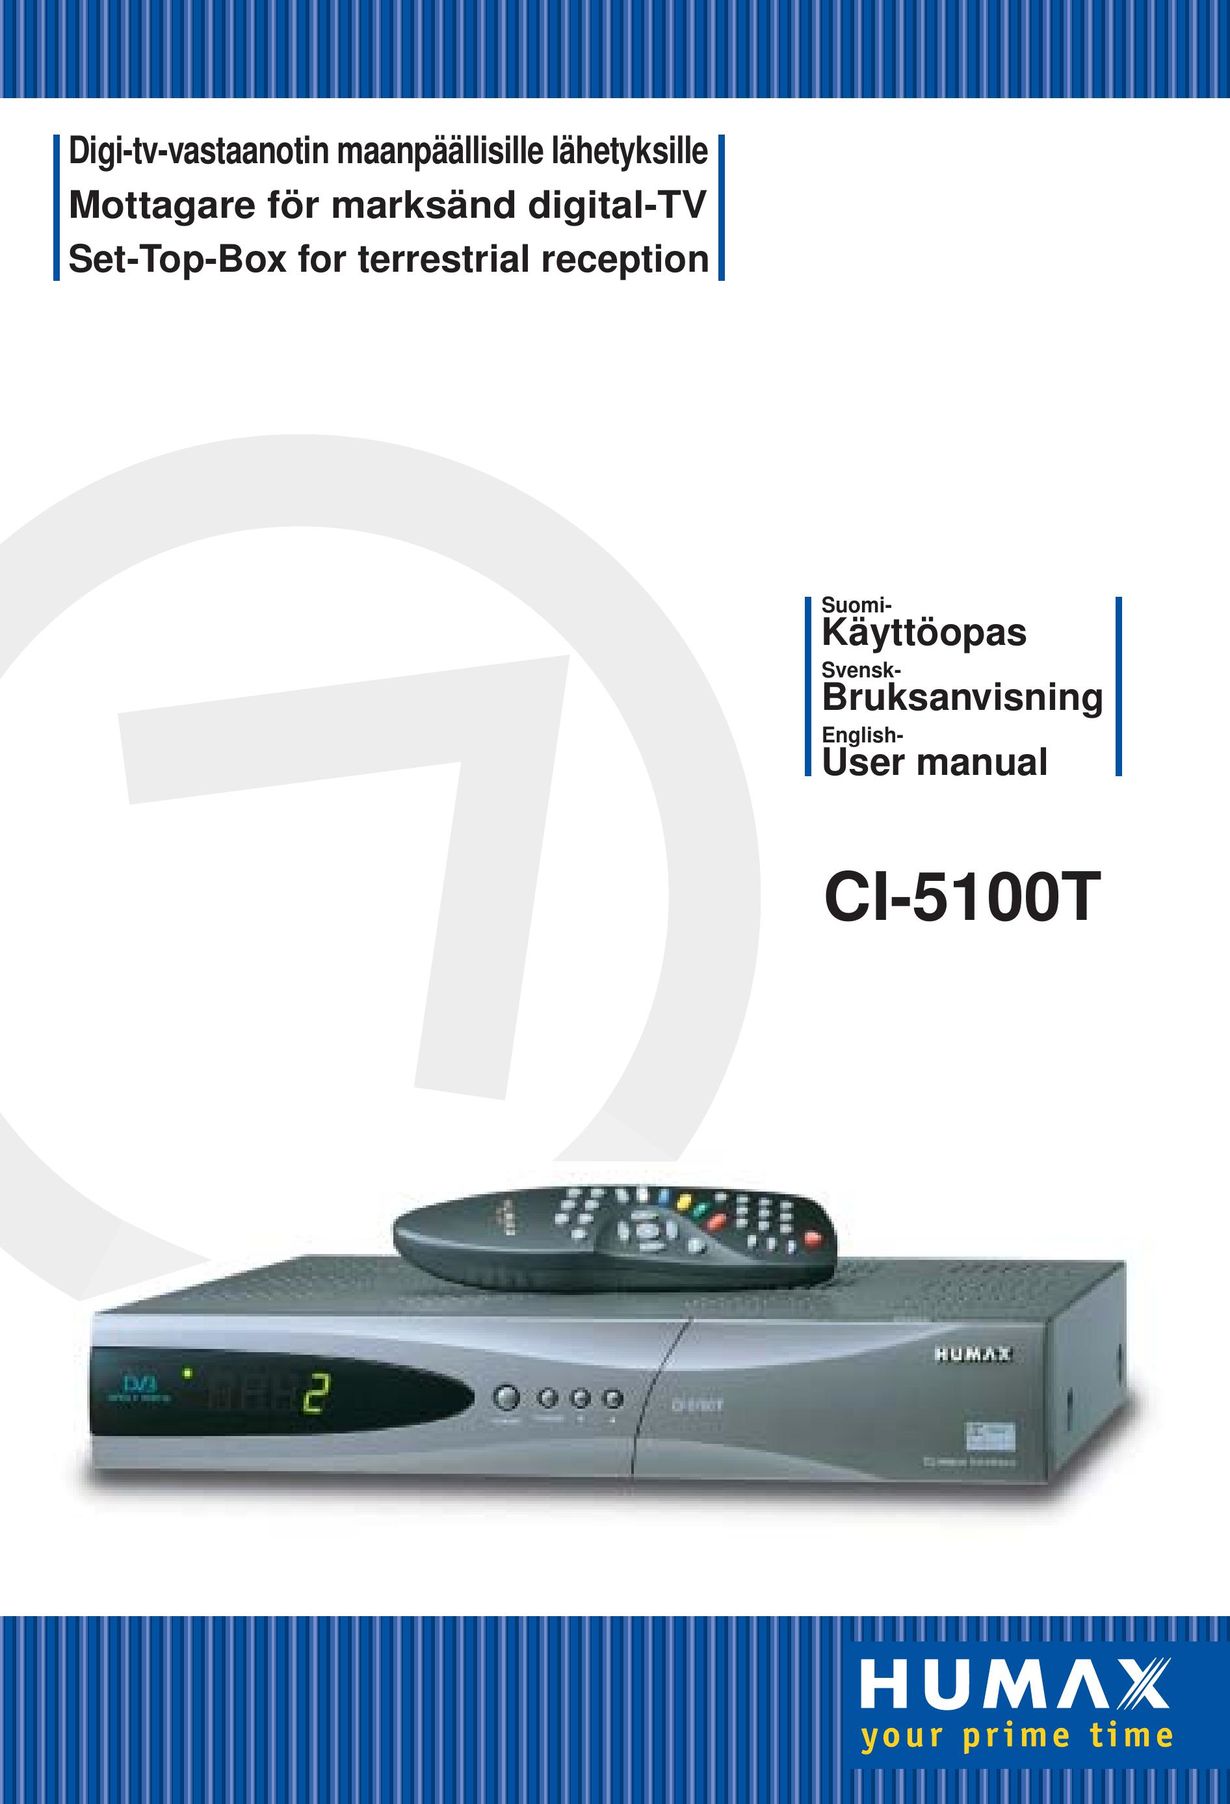 Humax CI-5100T TV Receiver User Manual